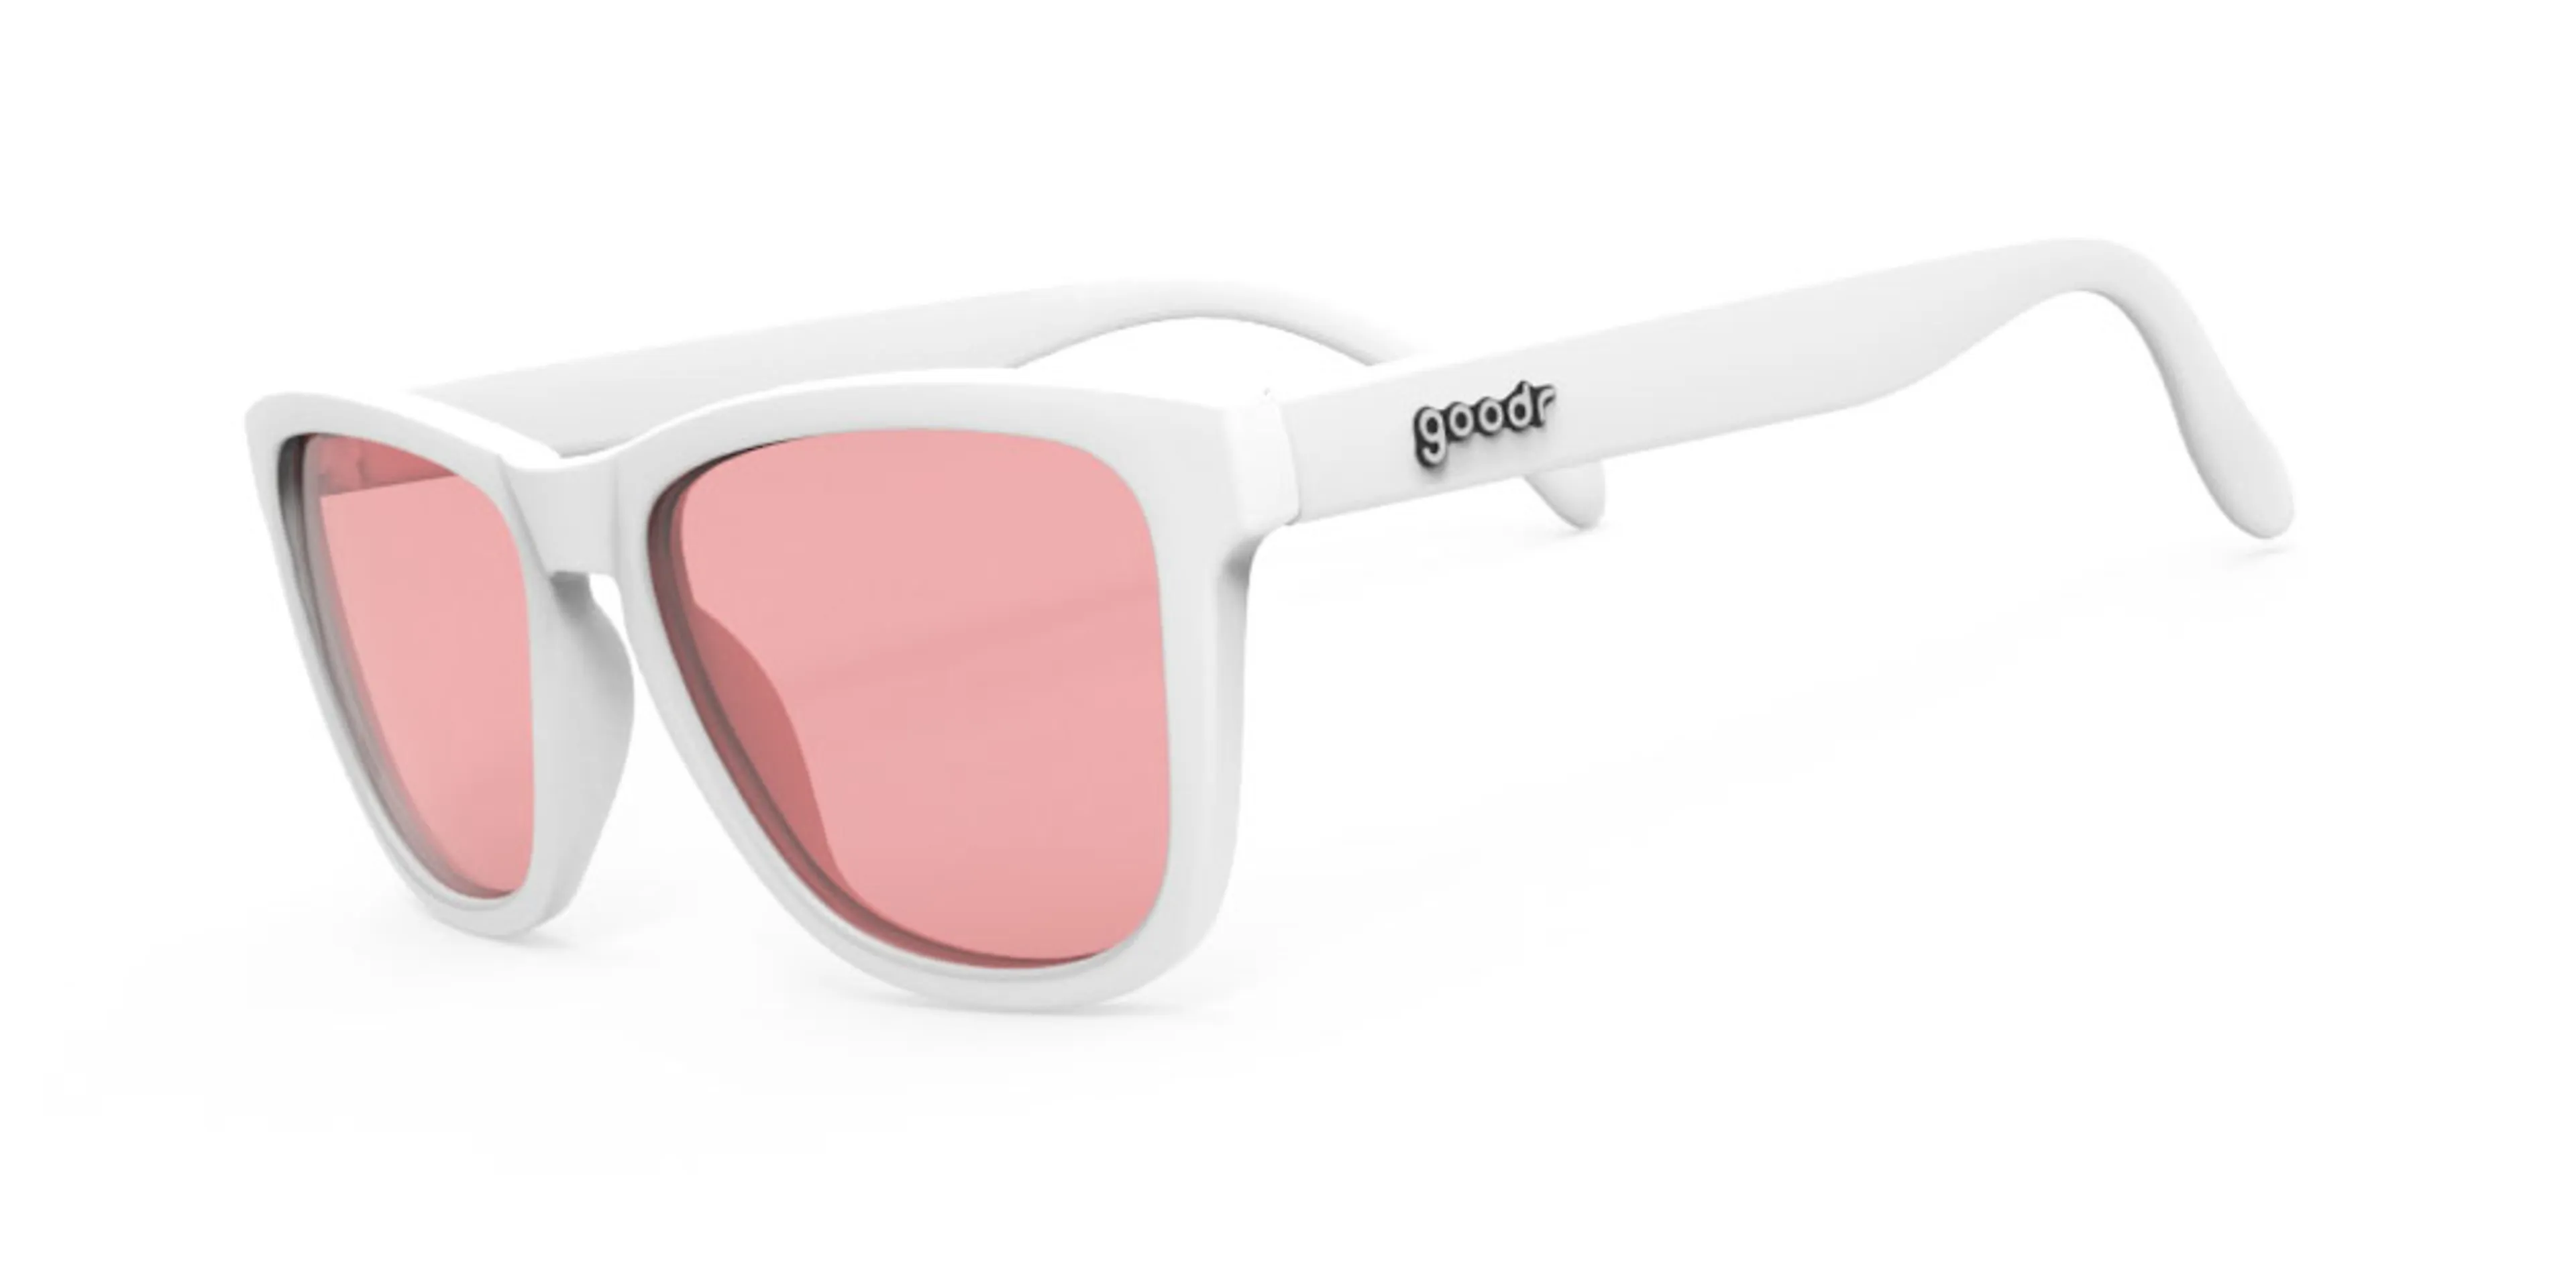 FOG Goodr Golf Sunglasses